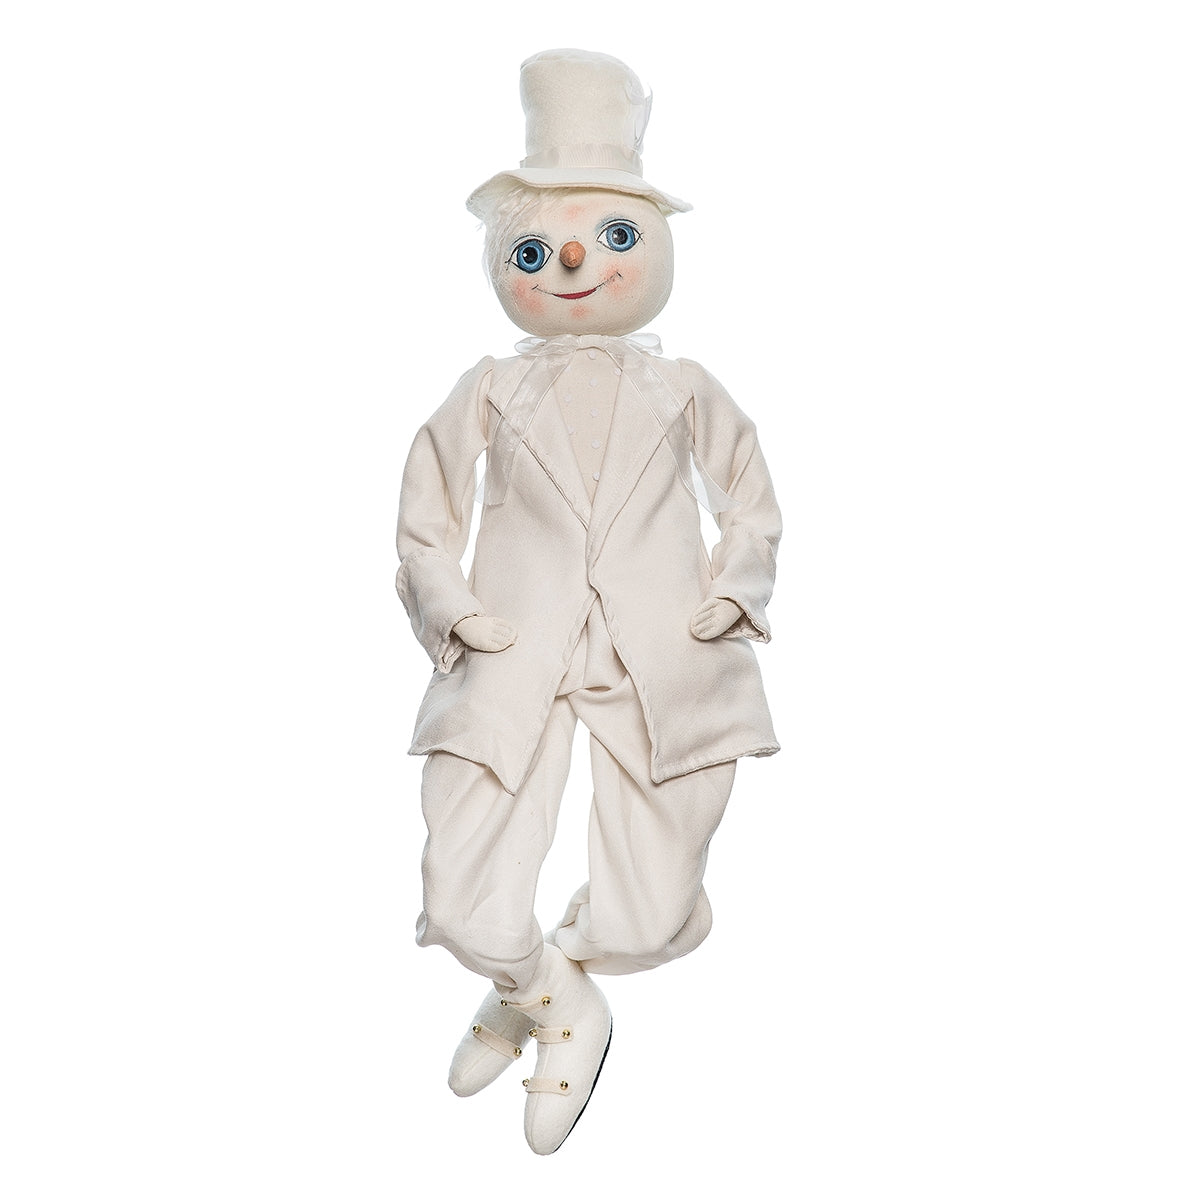 Joe Spencer Sir Snow Snowman in White Suit